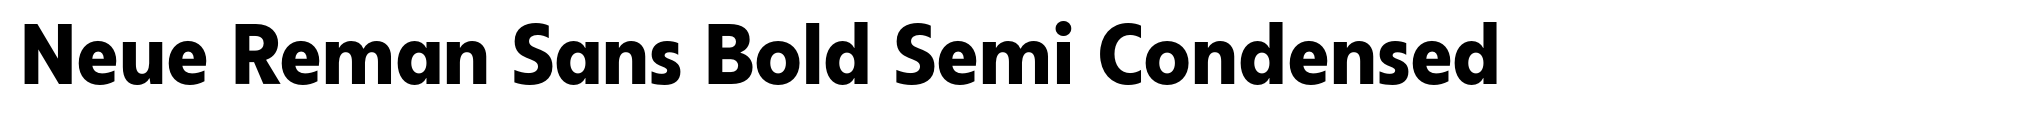 Neue Reman Sans Bold Semi Condensed image